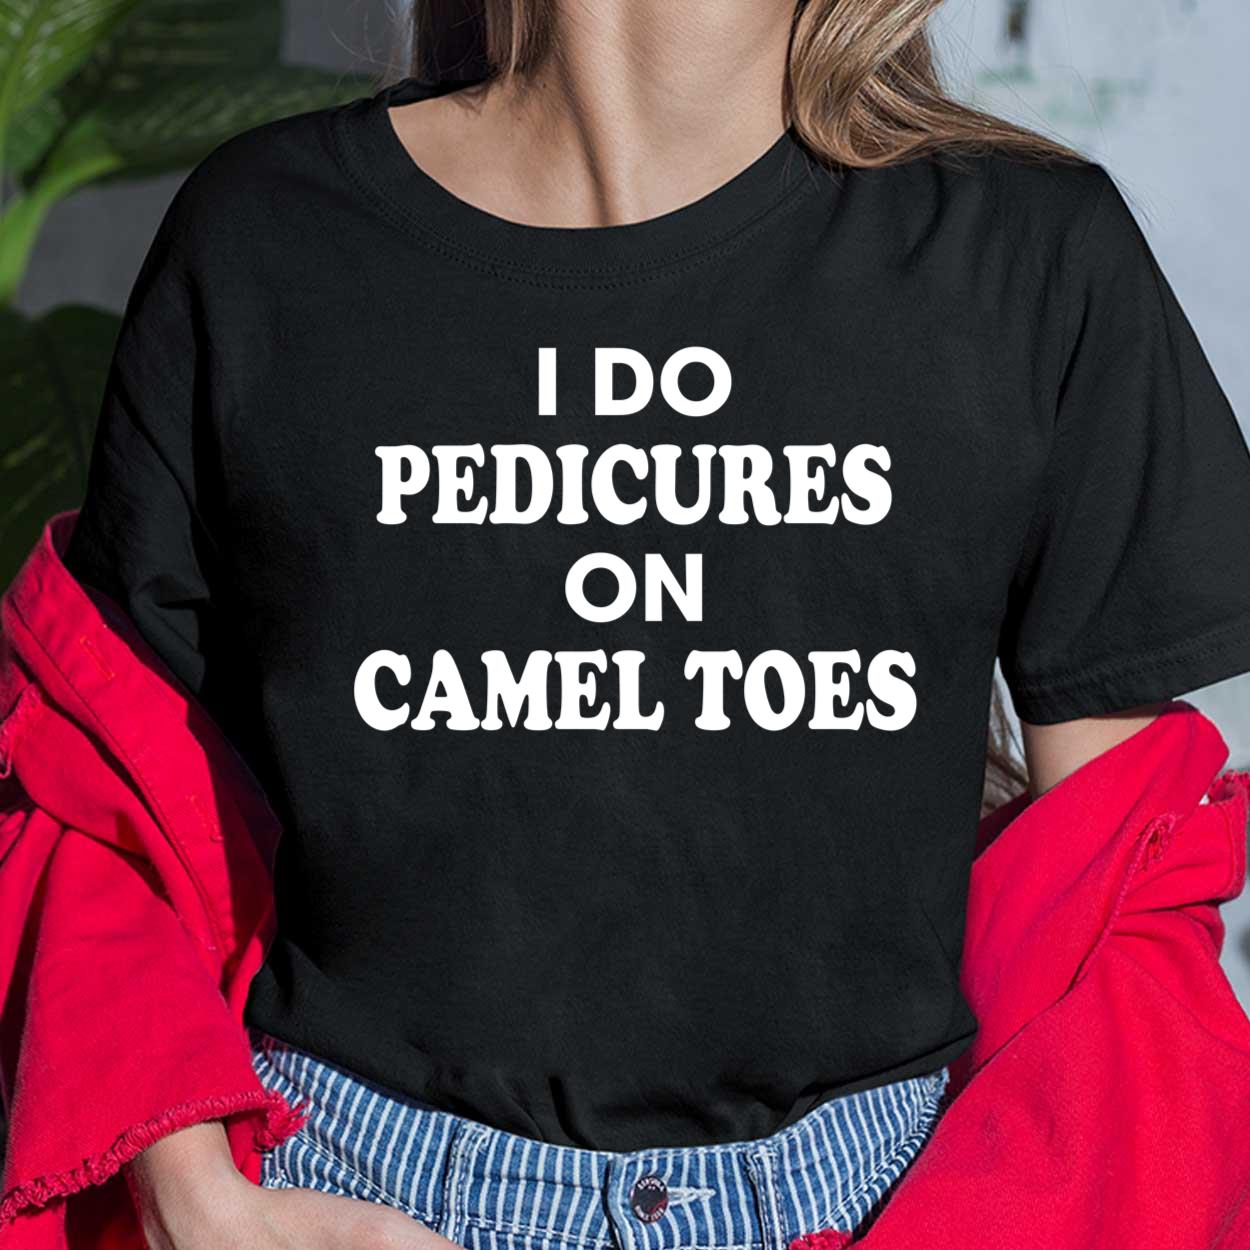 I Do Pedicures On Camel Toes Shirt, Hoodie, Sweatshirt, Women Tee - Lelemoon